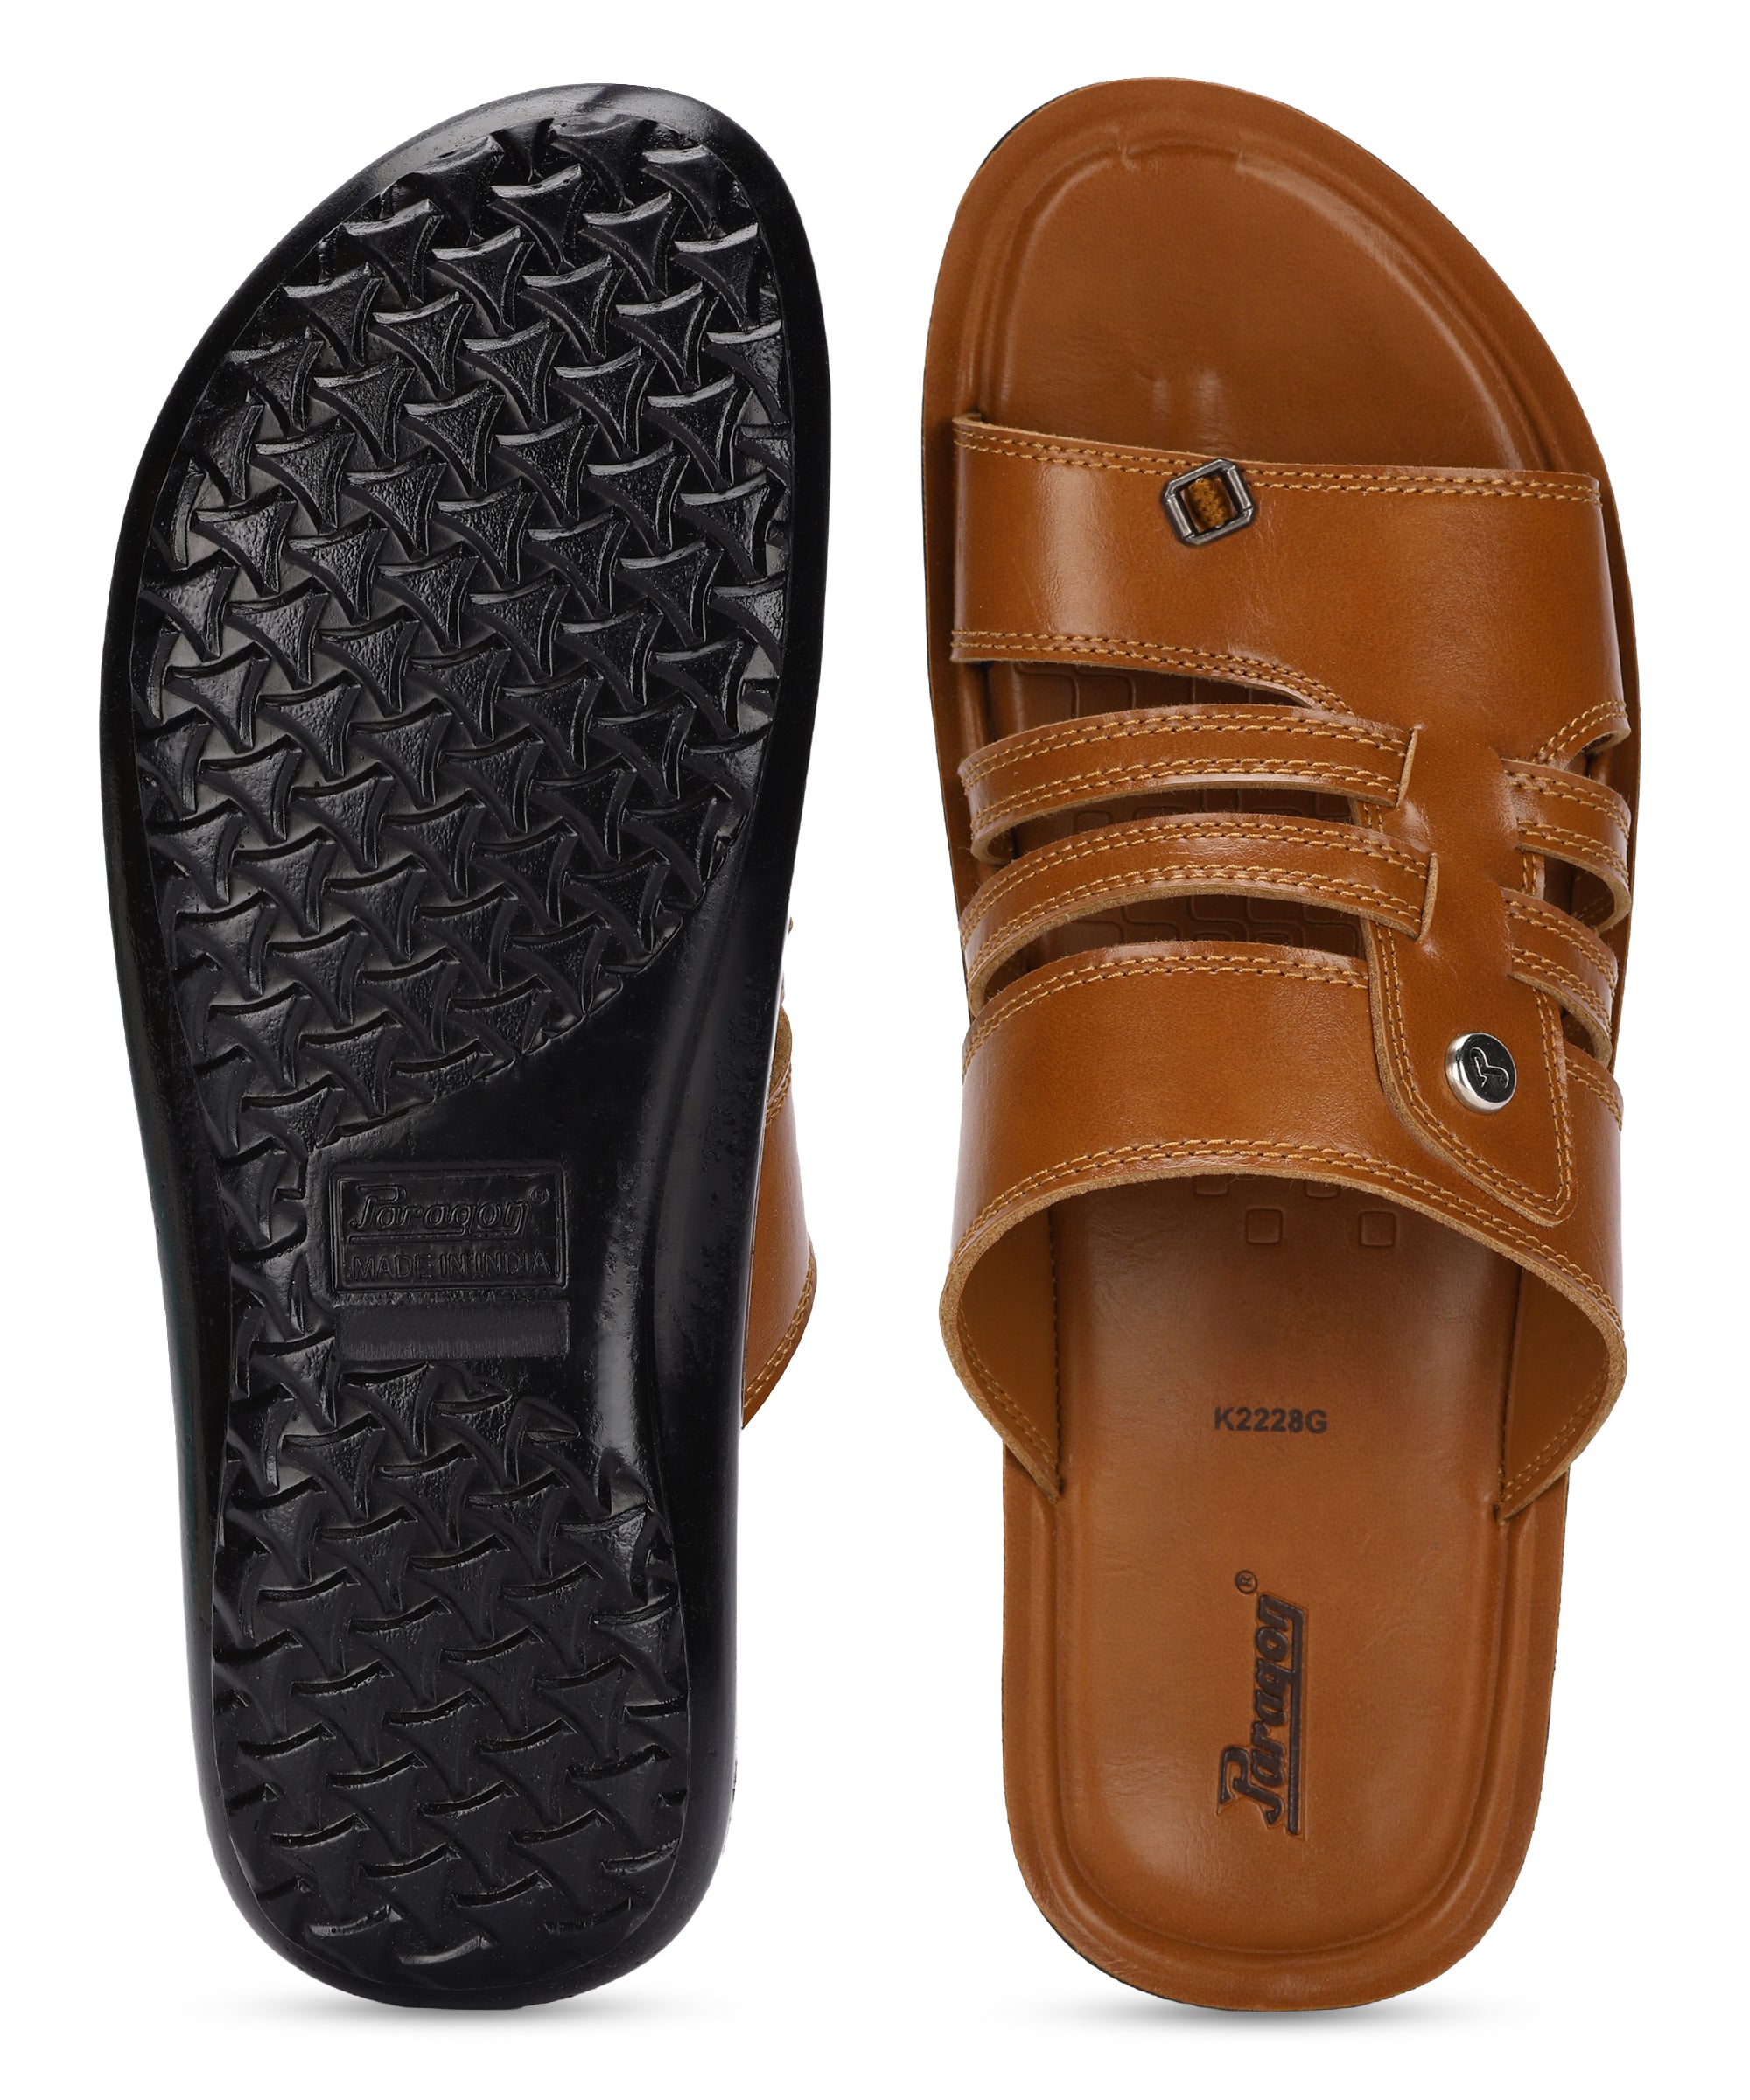 YOHO EVA Sandals for Women | EVA sole | Comfortable cushioned sole with TPR  base | Lightweight | Soft skin friendly straps | Adjustable straps | Velcro  closure | Vibrant colour options,Size 6 UK